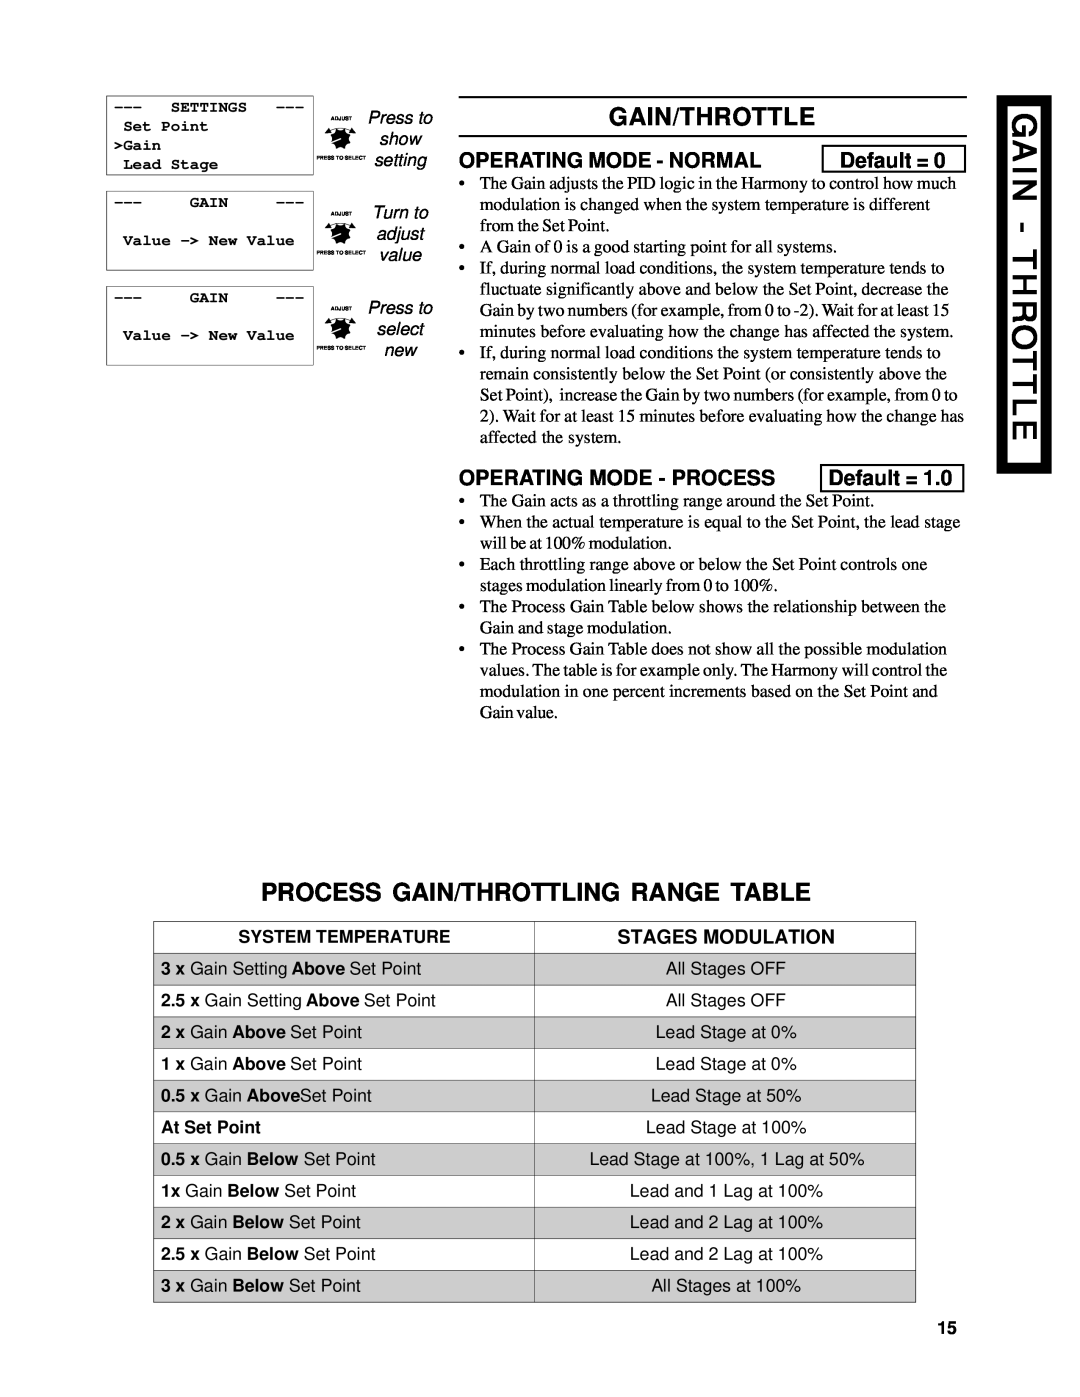 Lochinvar Harmony Gain/Throttle, Process Gain/Throttling Range Table, Operating Mode - Normal, Default = 